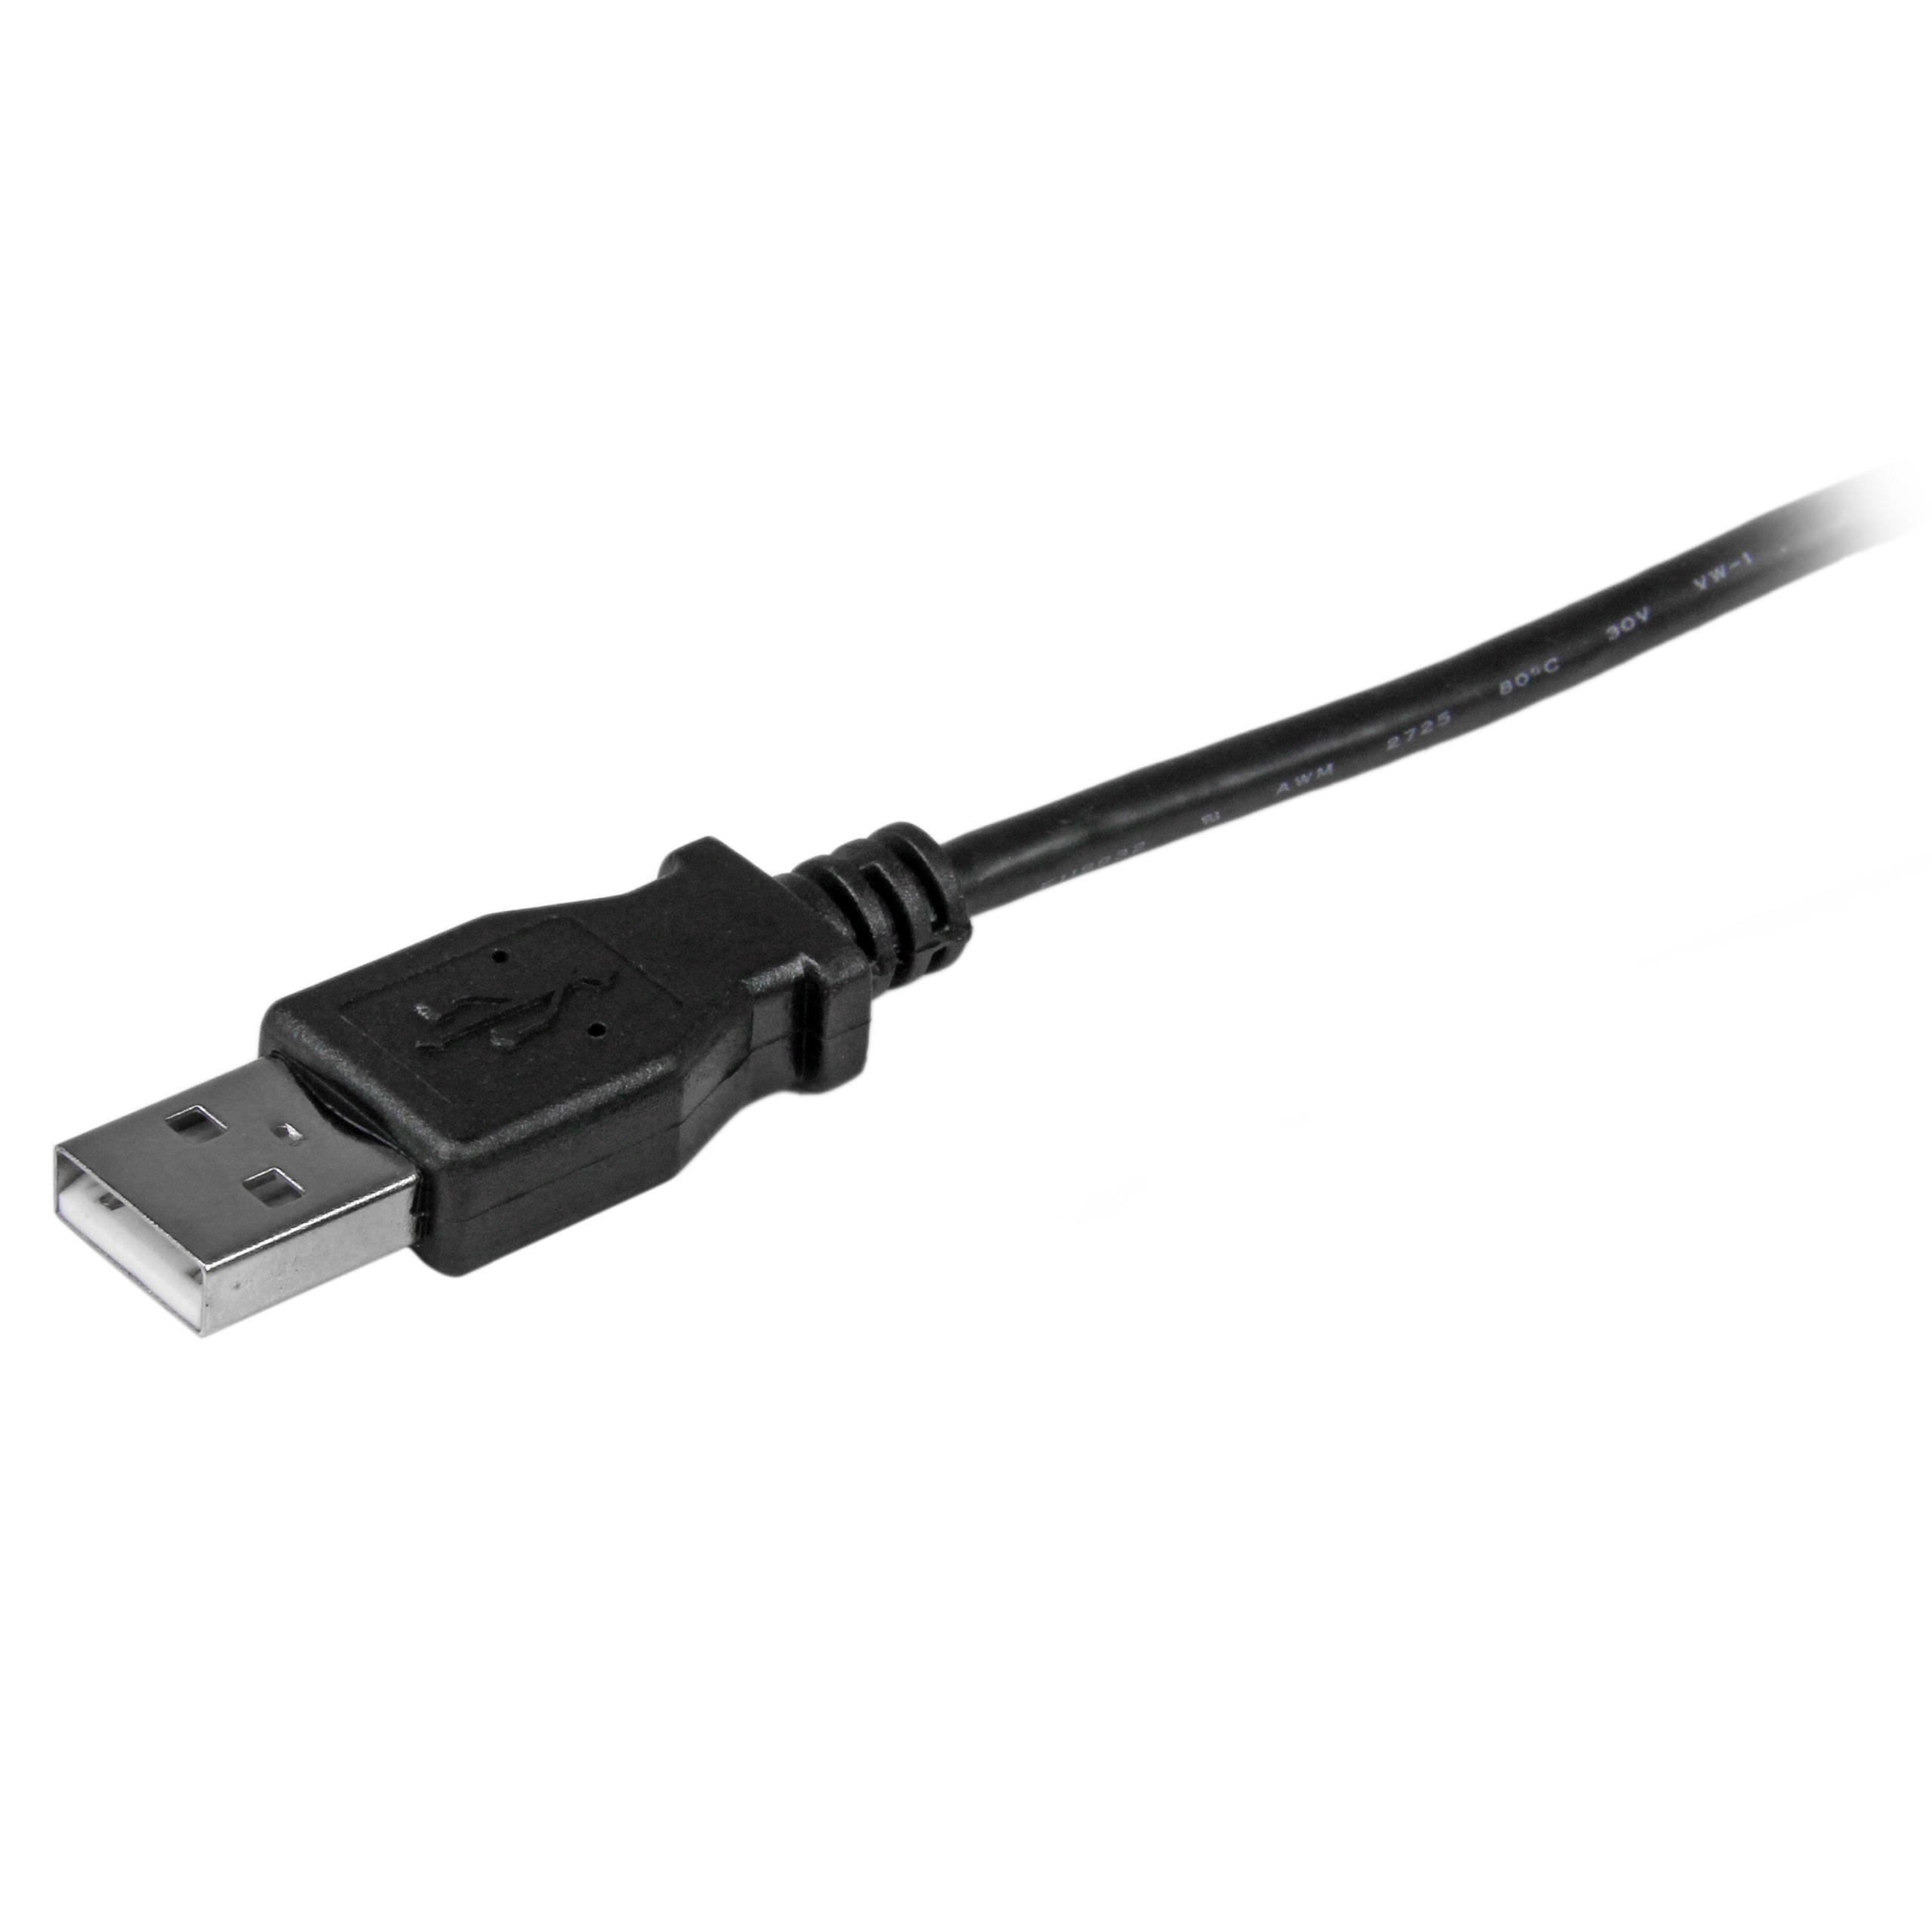 Amazon.com: StarTech.com Micro USB Cable - A to Micro B (UUSBHAUB6 ...